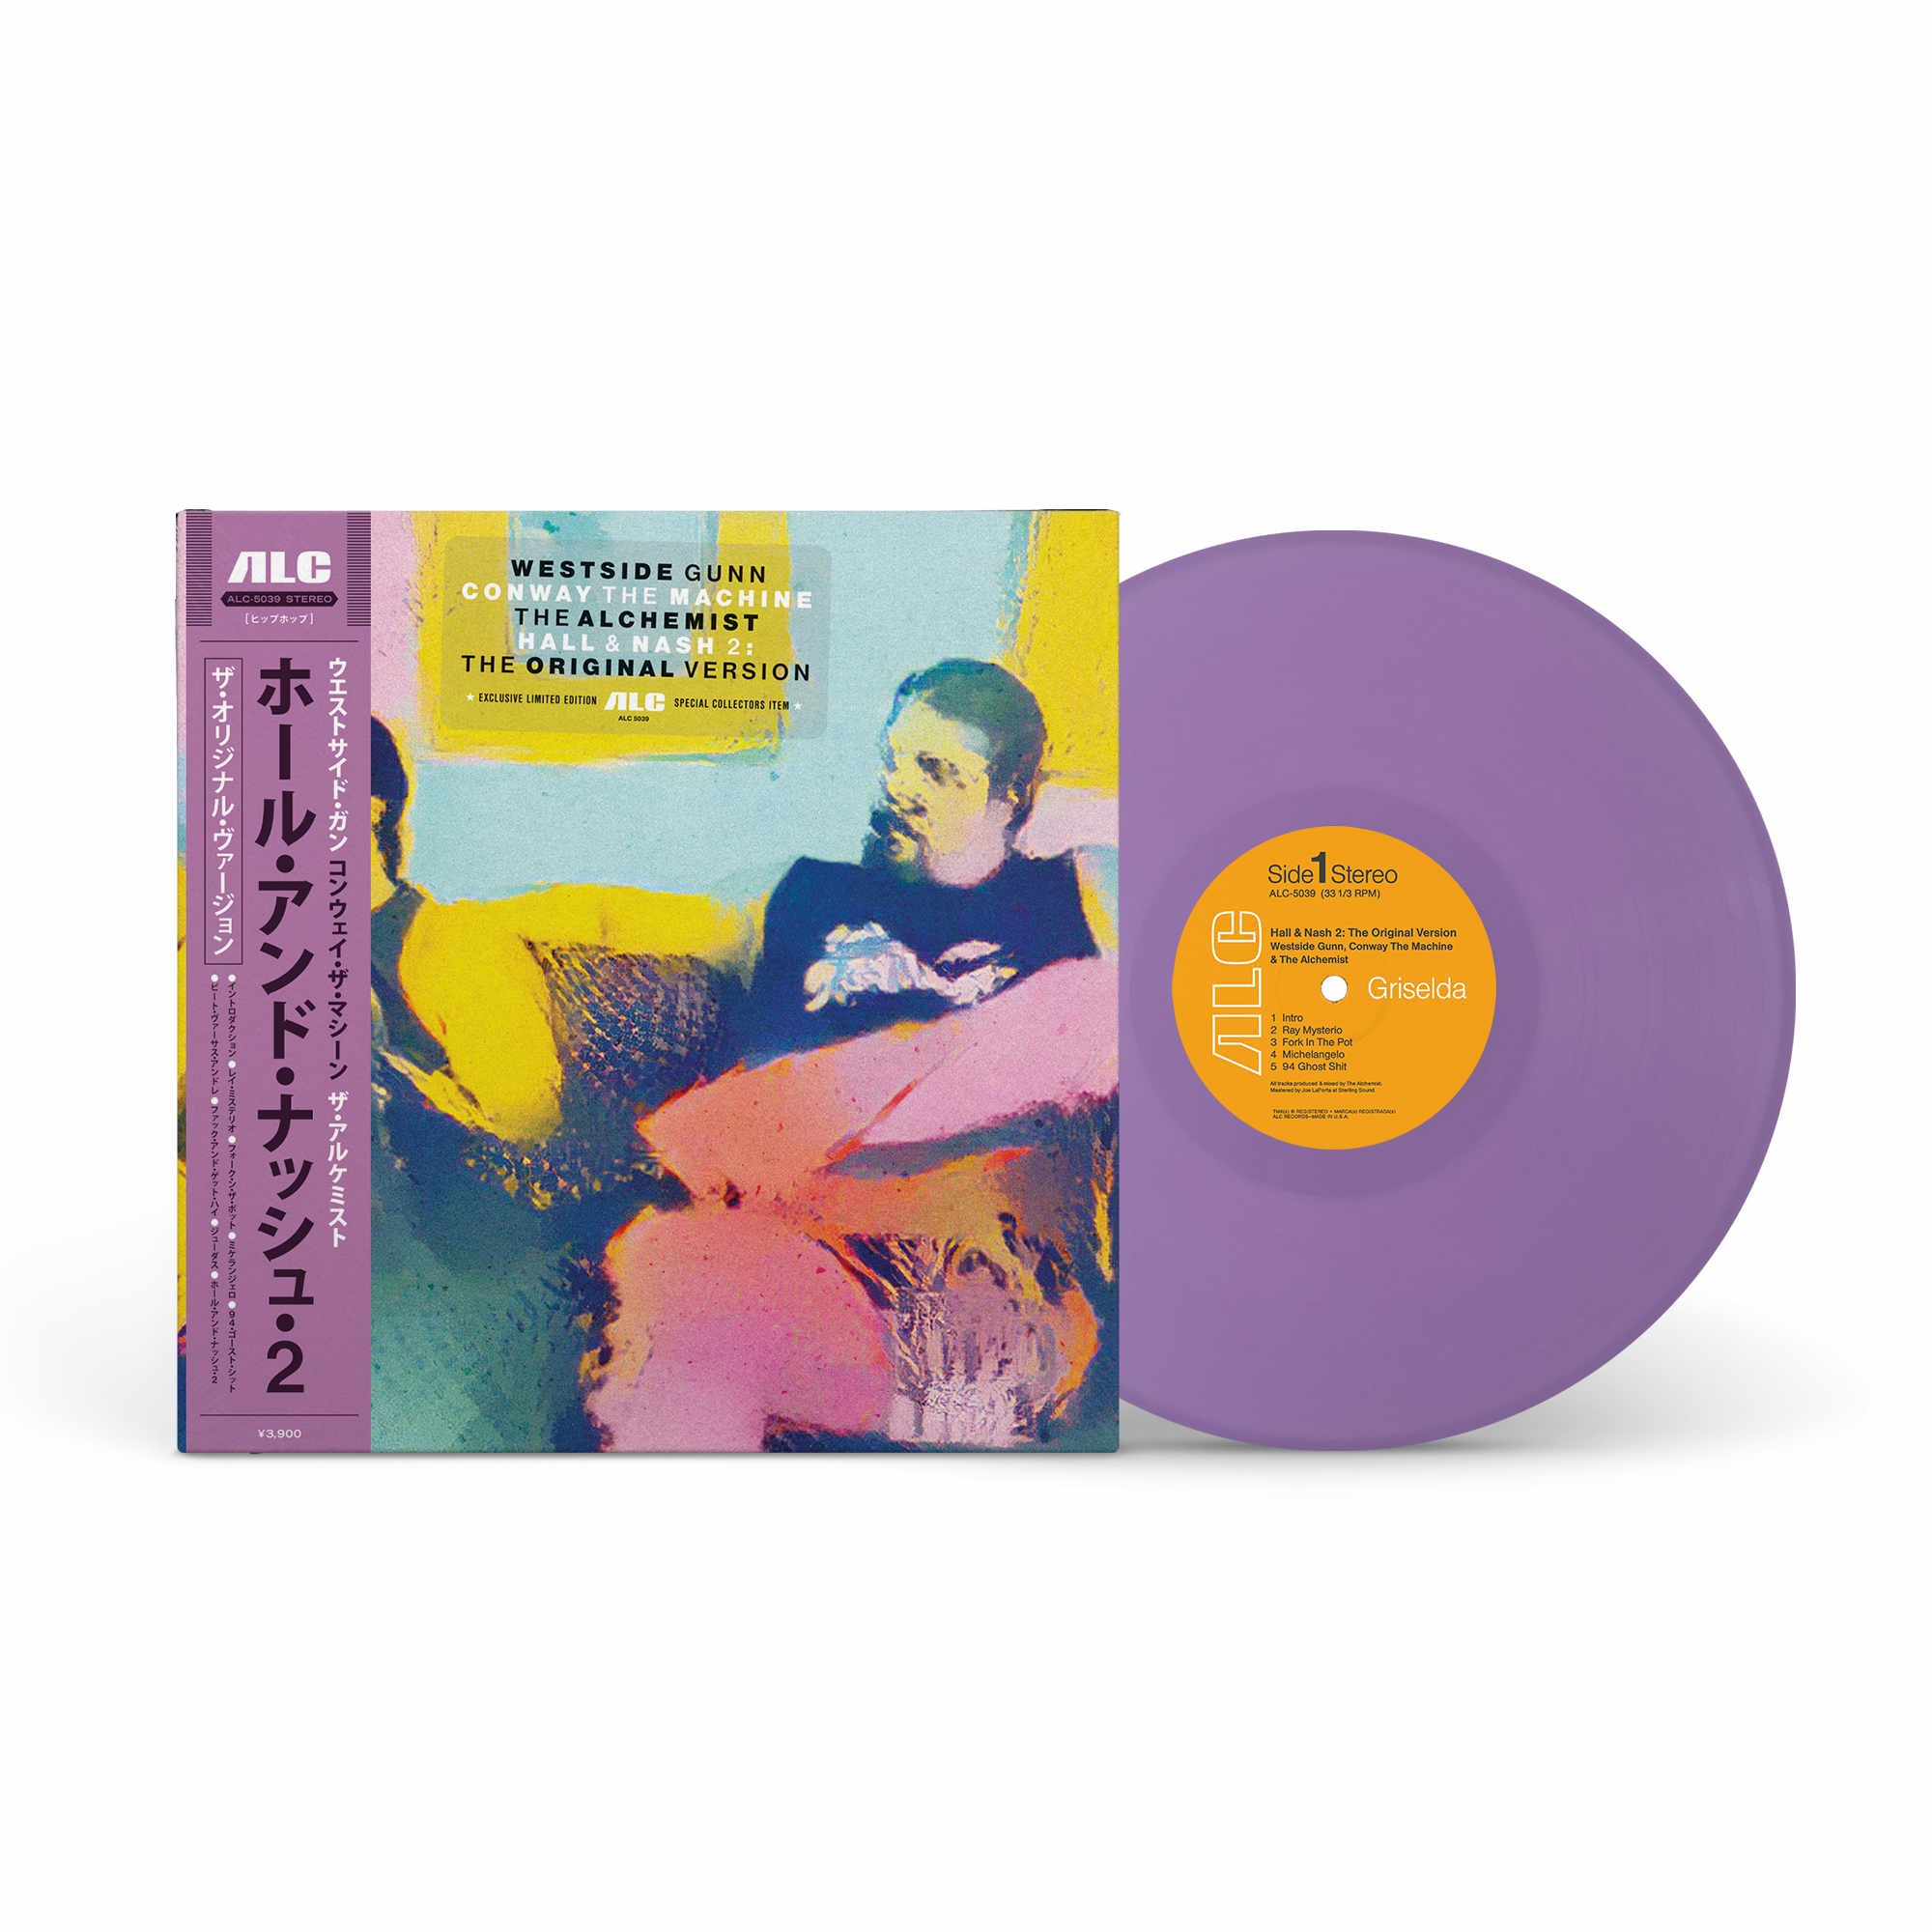 Hall & Nash 2: The Original Version (LP - Purple Vinyl)